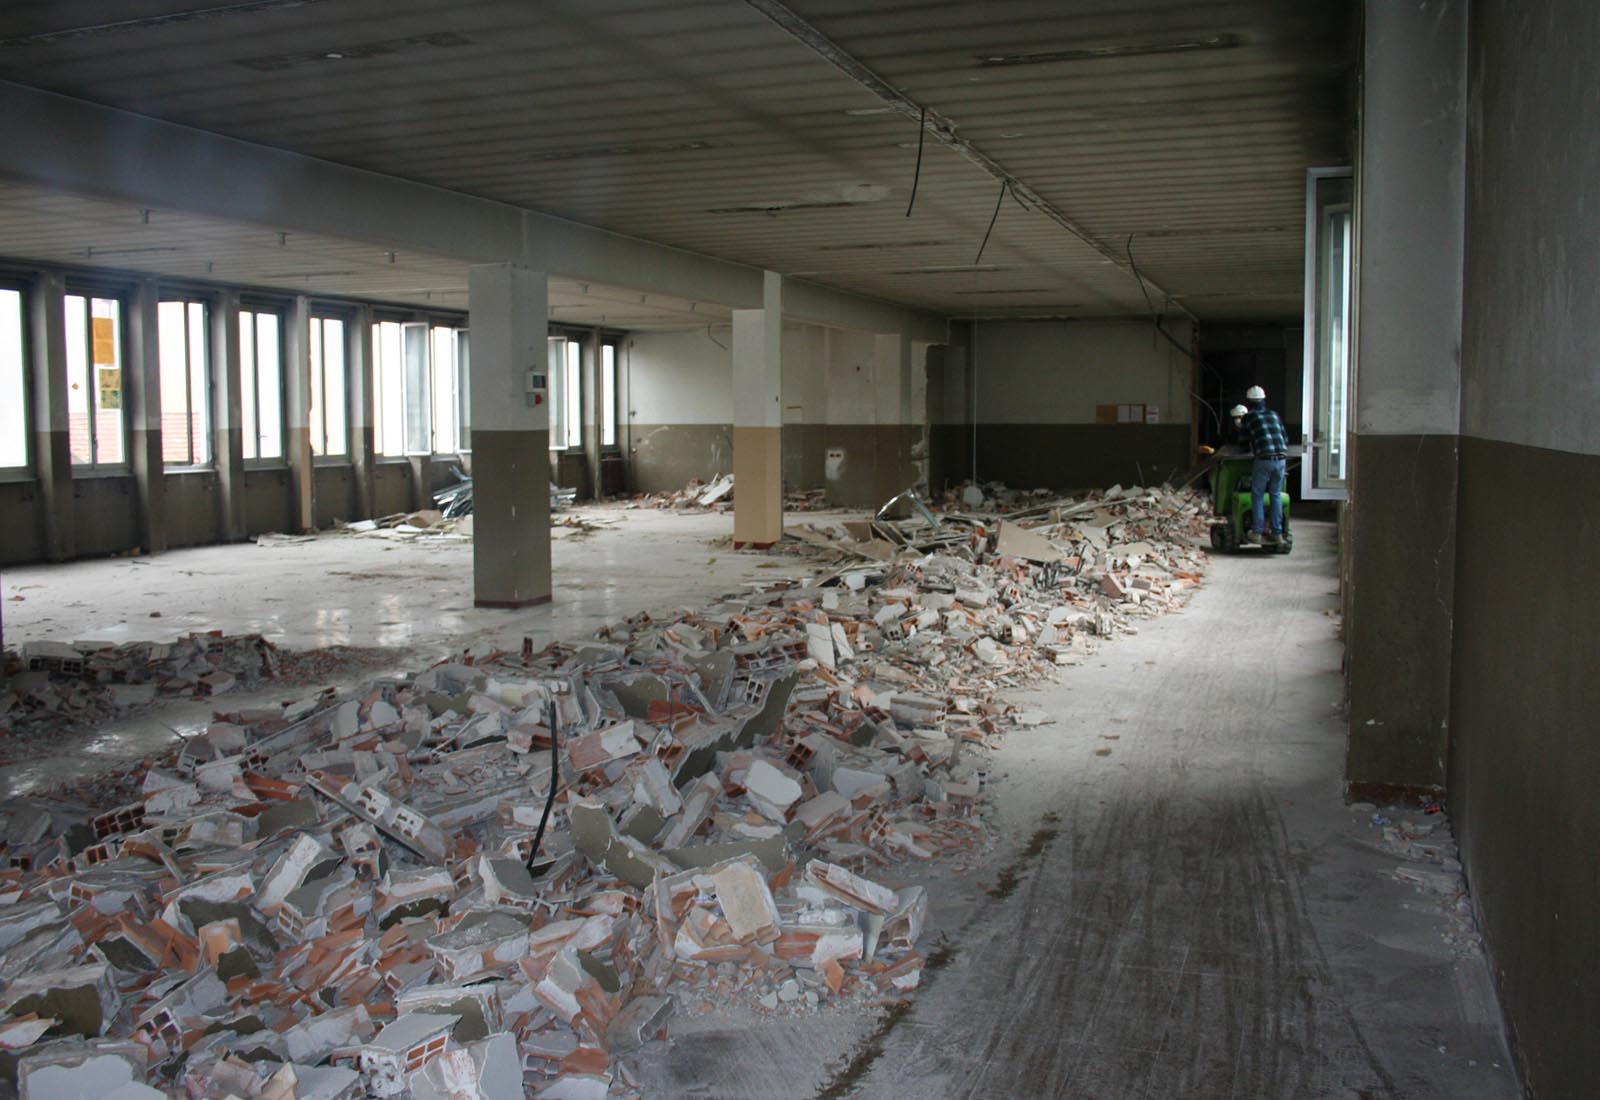 Manzoni school center in Milan - Demolition of the walls